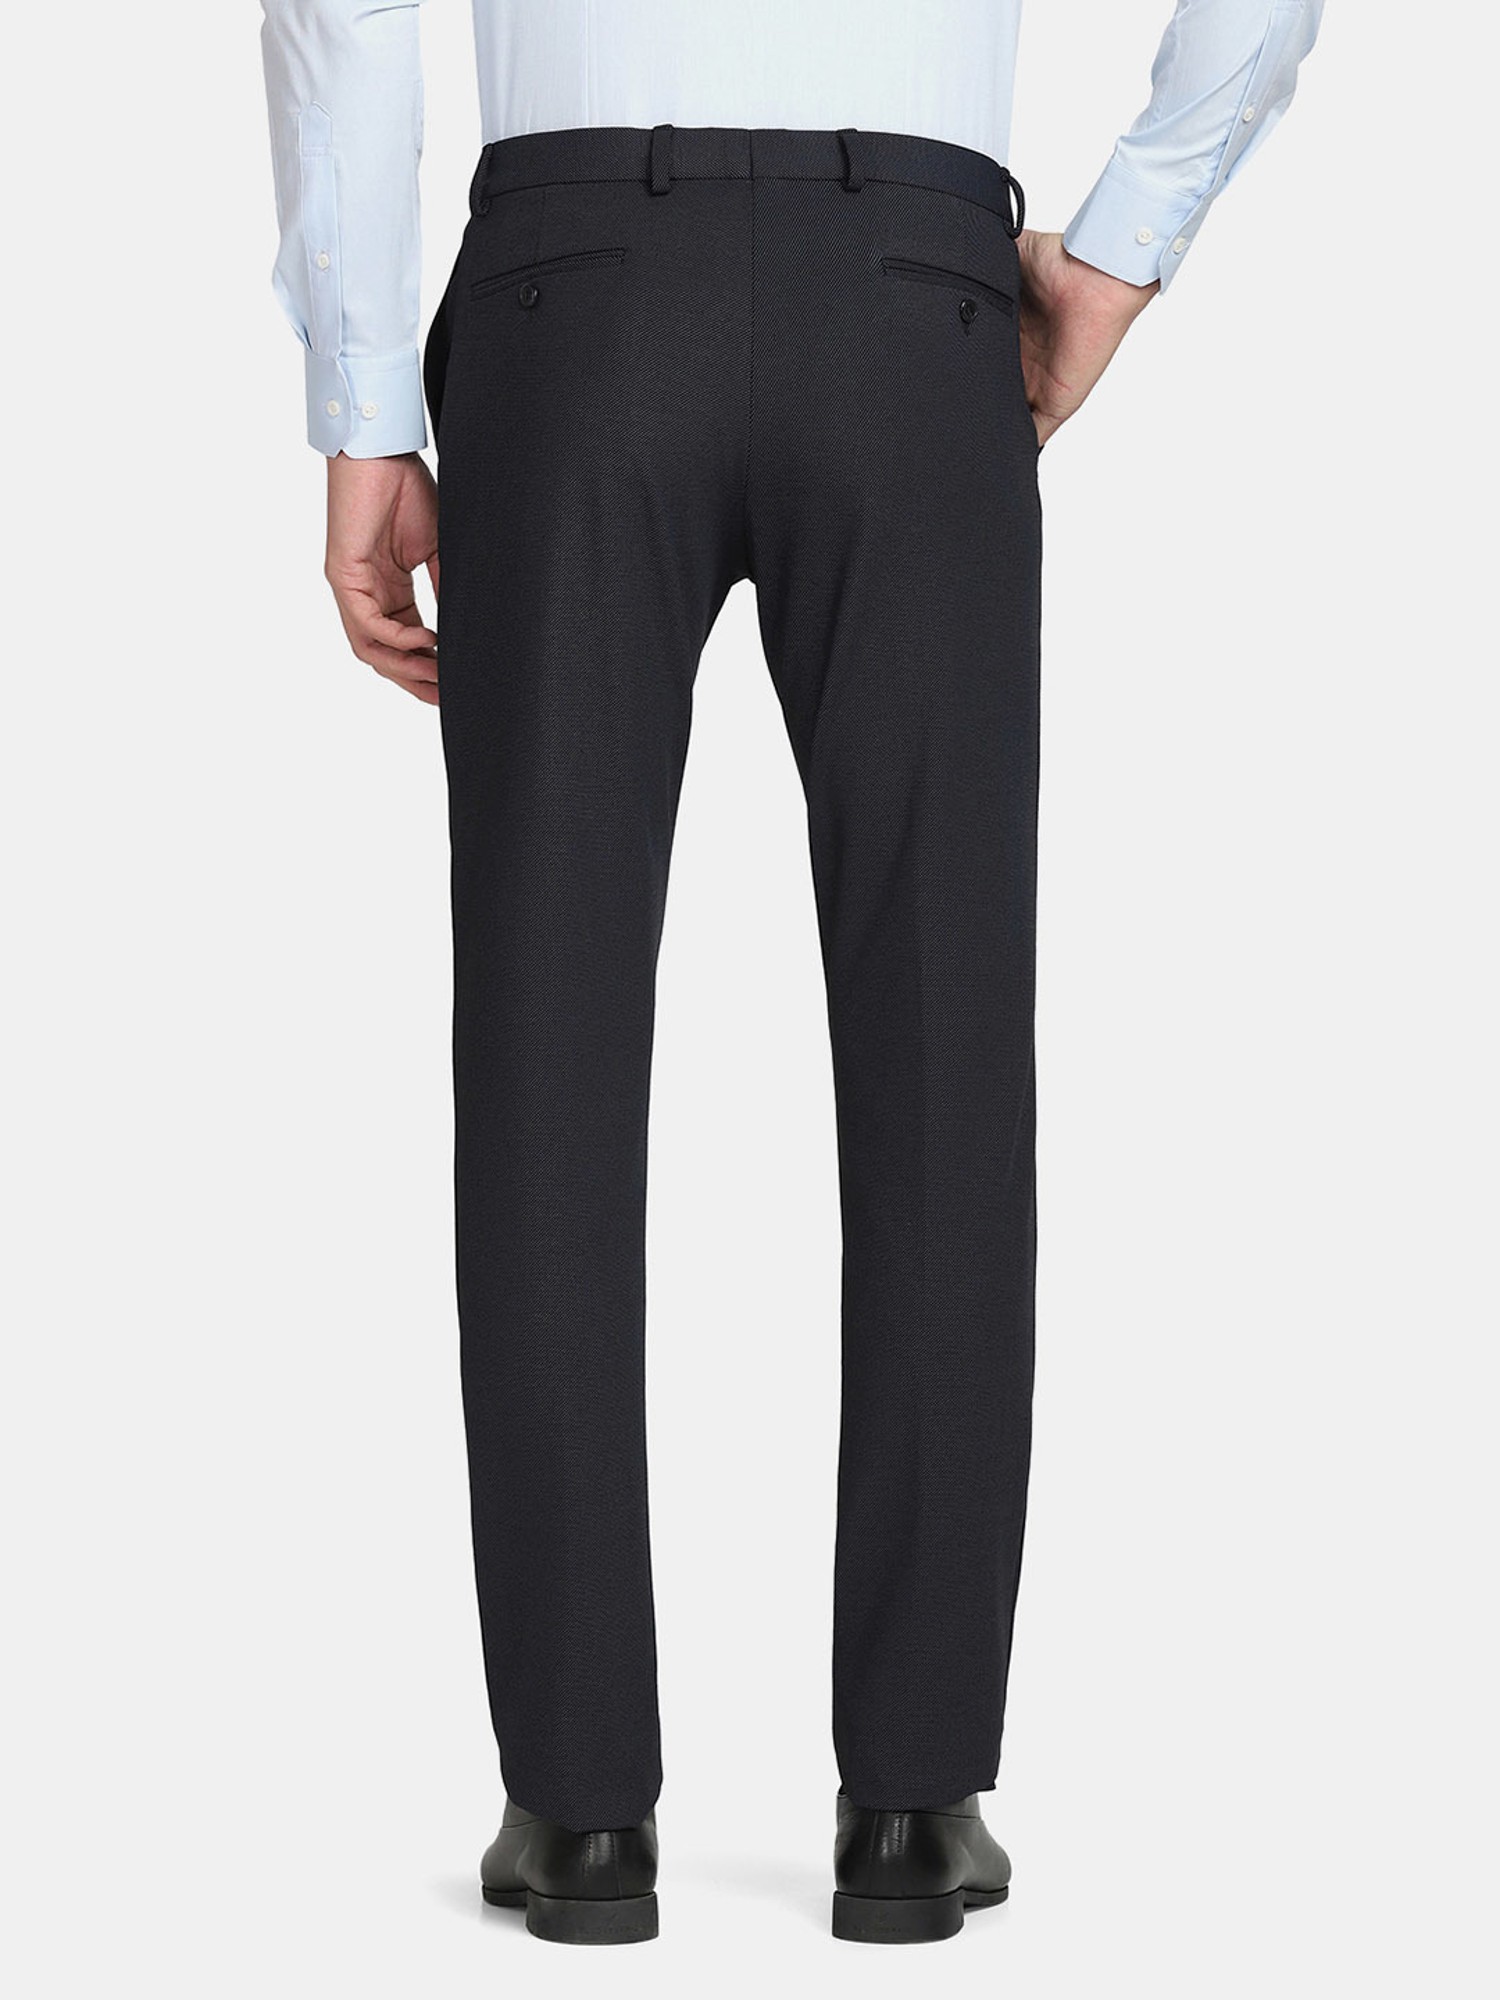 Buy blackberrys Men's Skinny Fit Formal Trousers (BP-Roman:GRBI17E_Slate  Grey_30) at Amazon.in